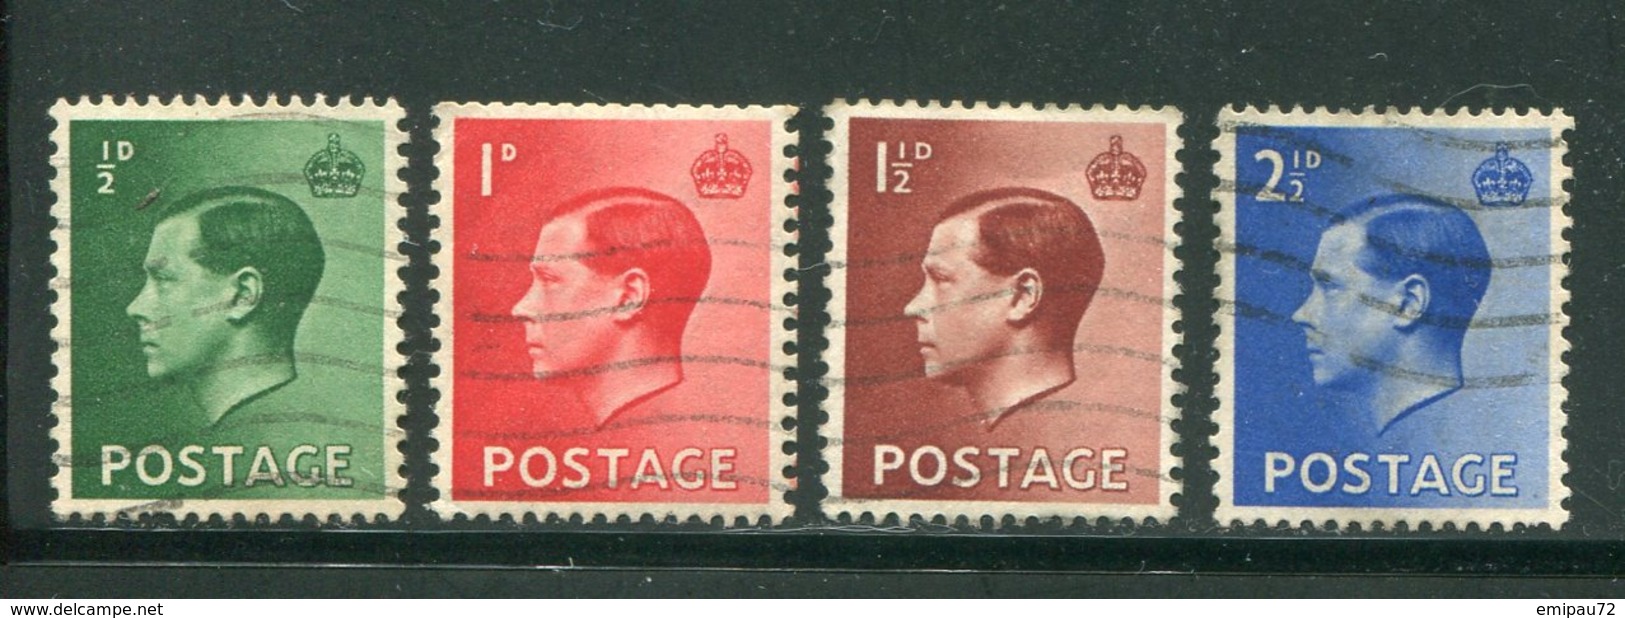 GRANDE BRETAGNE- Y&T N°205 à 208- Oblitérés - Used Stamps